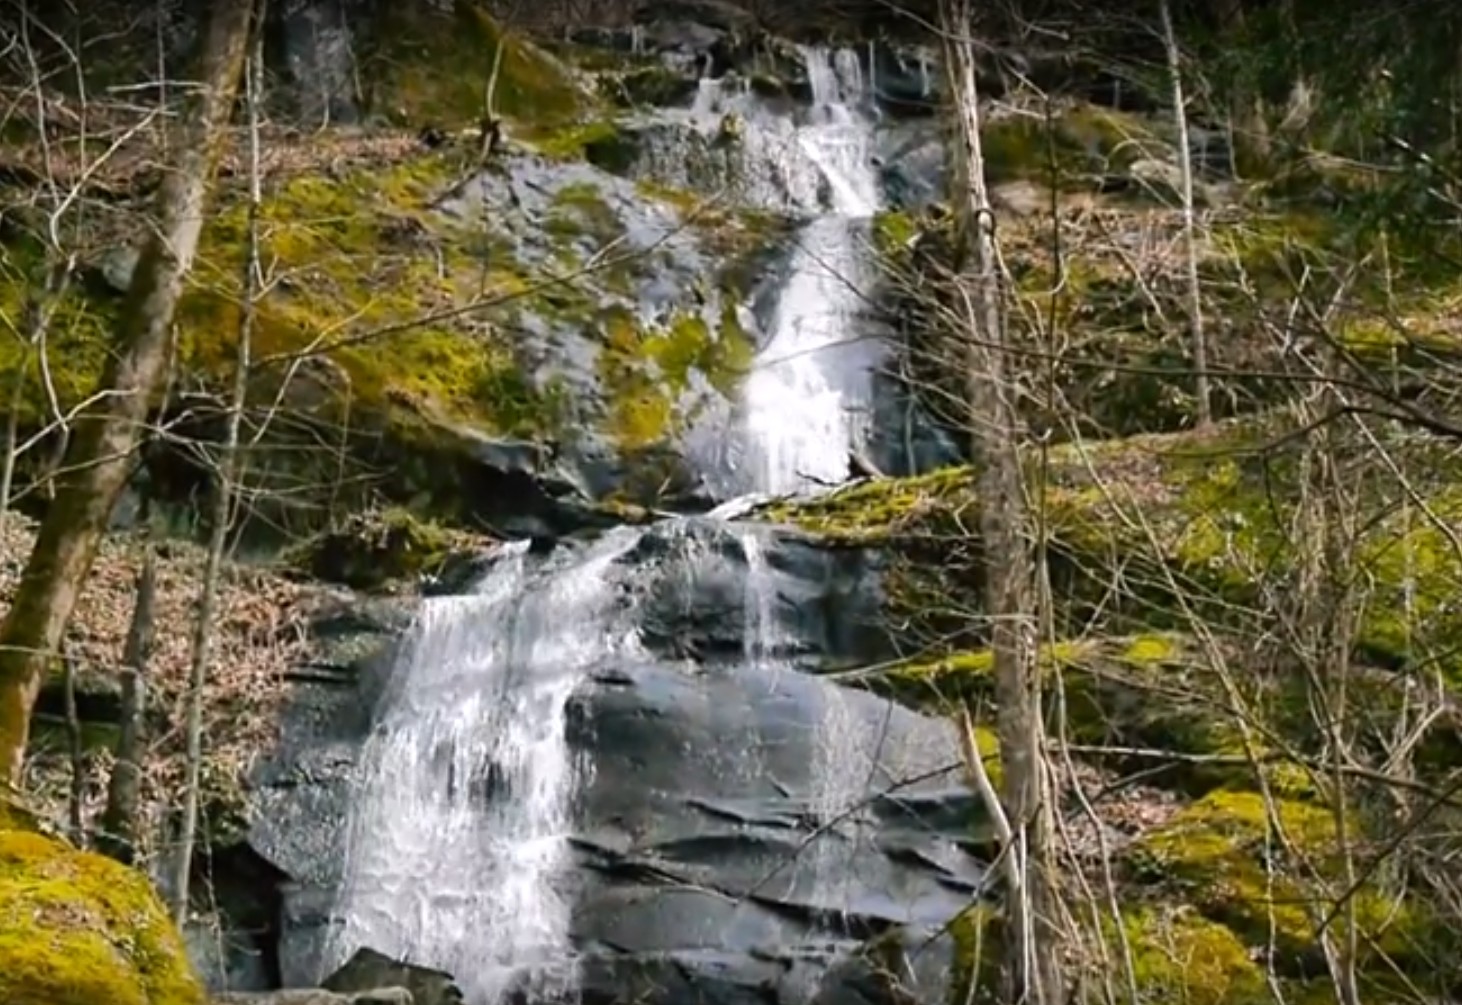 Fern Branch Falls and Porters Creek Trail: Great Trail, Great Waterfall